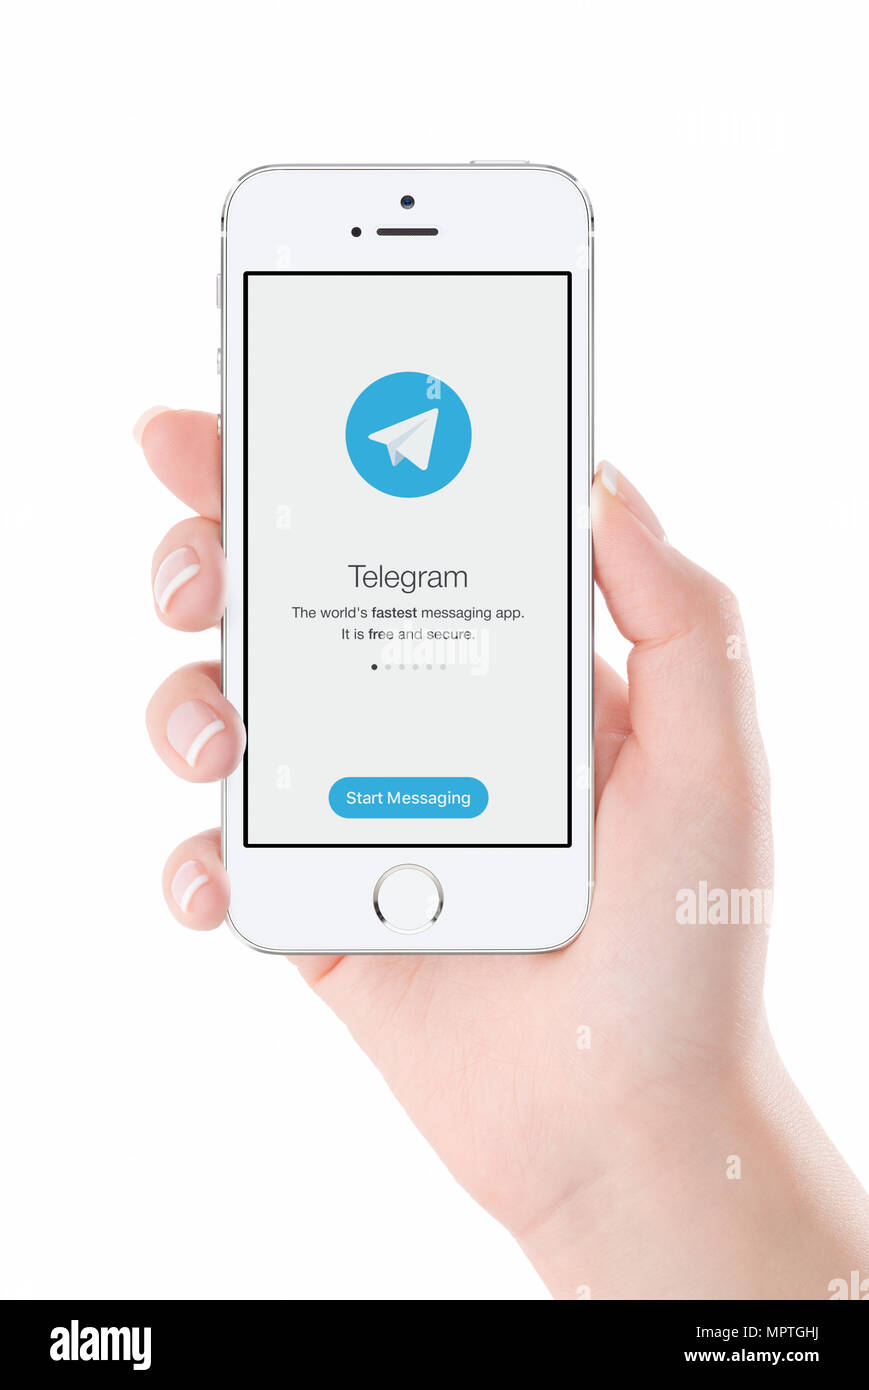 Telegram messenger launch screen on iPhone smartphone display in female hand. Stock Photo